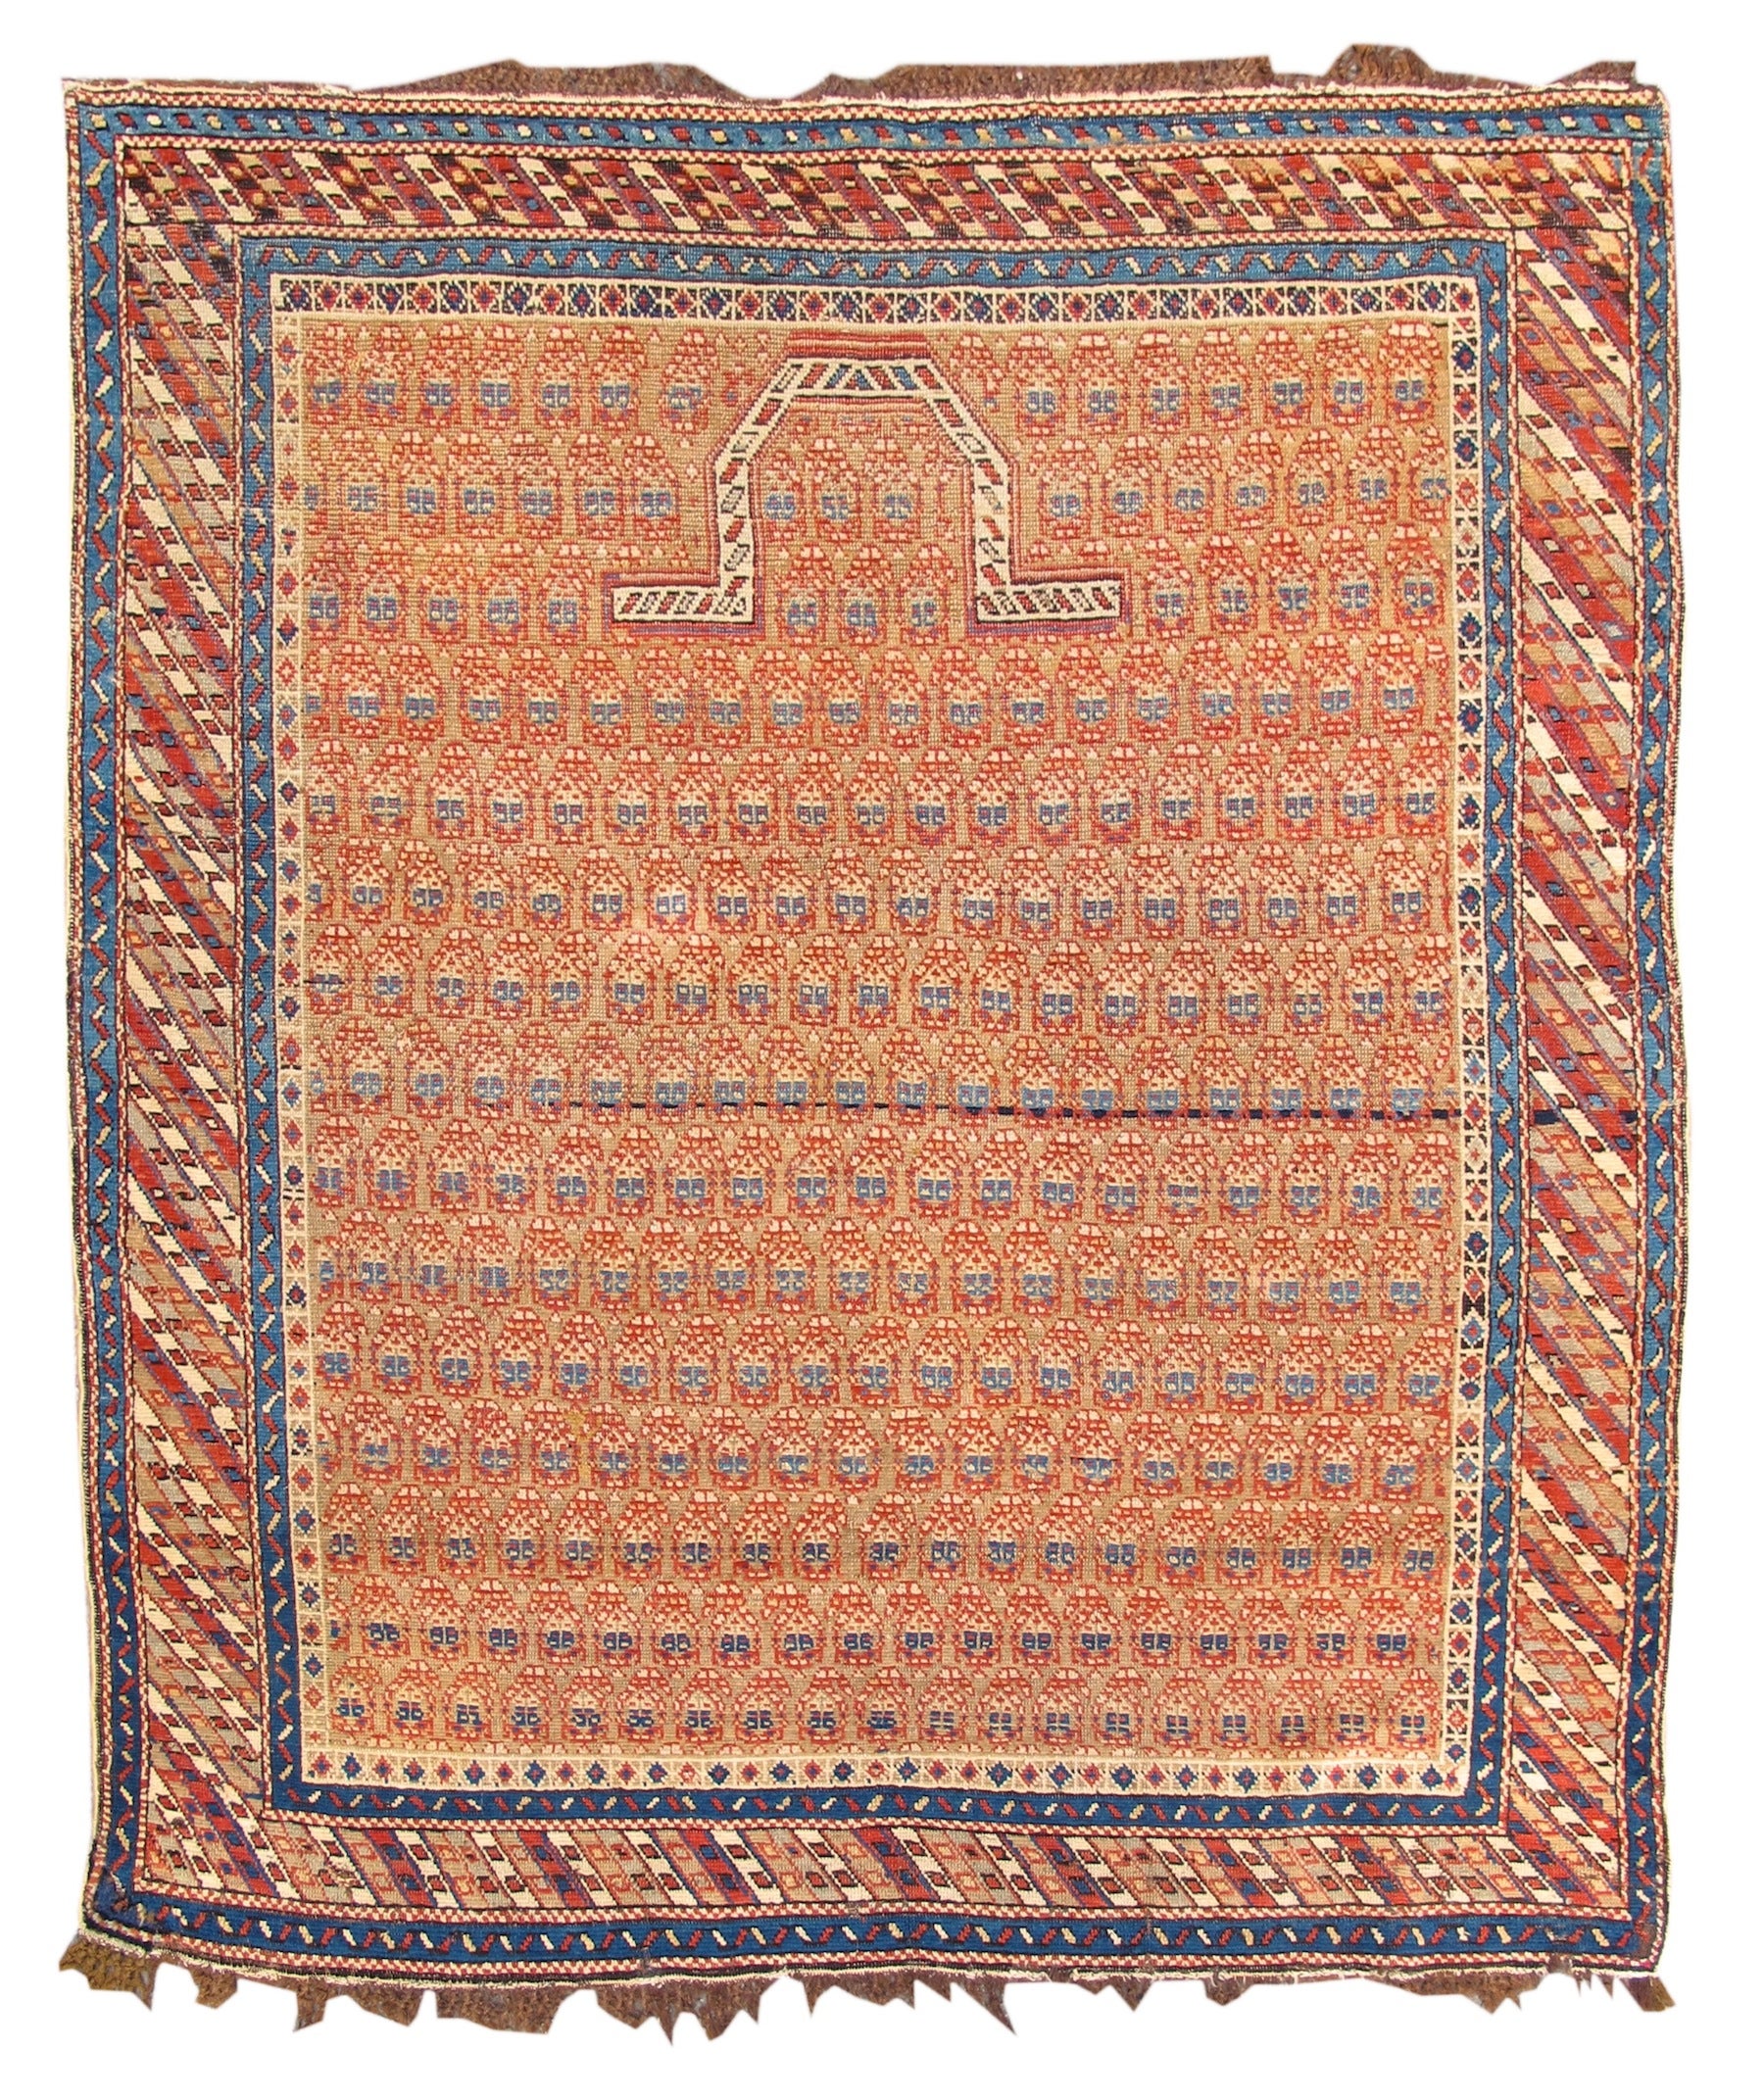 Late 19th Century Red Shirvan Prayer Rug with Paisleys